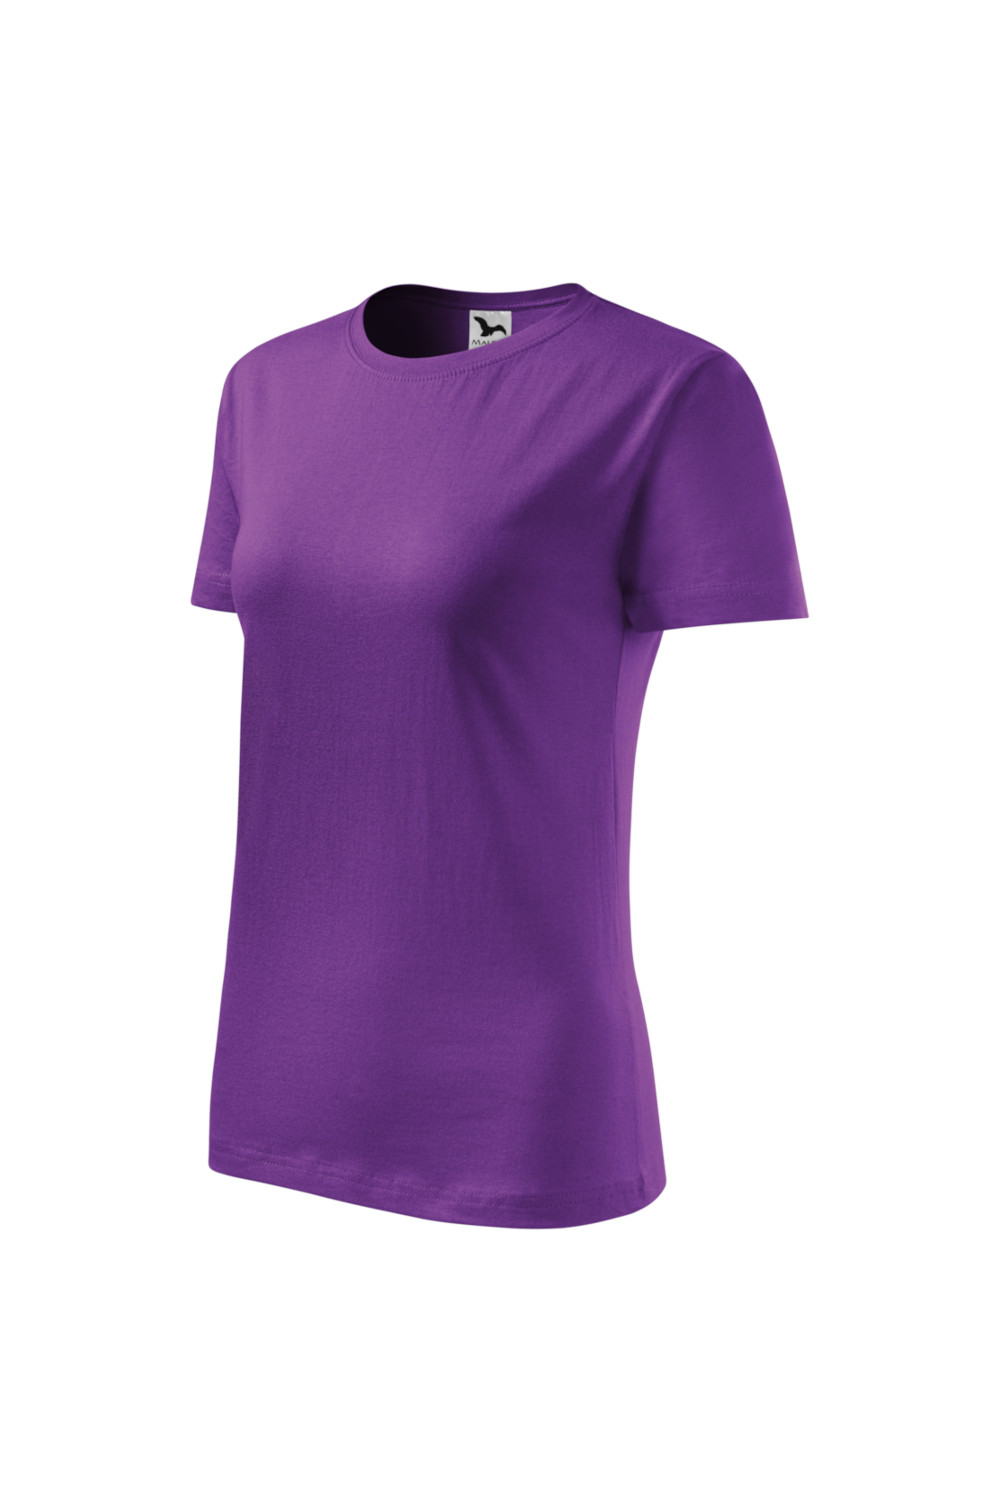 CLASSIC 133 MALFINI Koszulka damska 100% bawełna t-shirt fioletowy